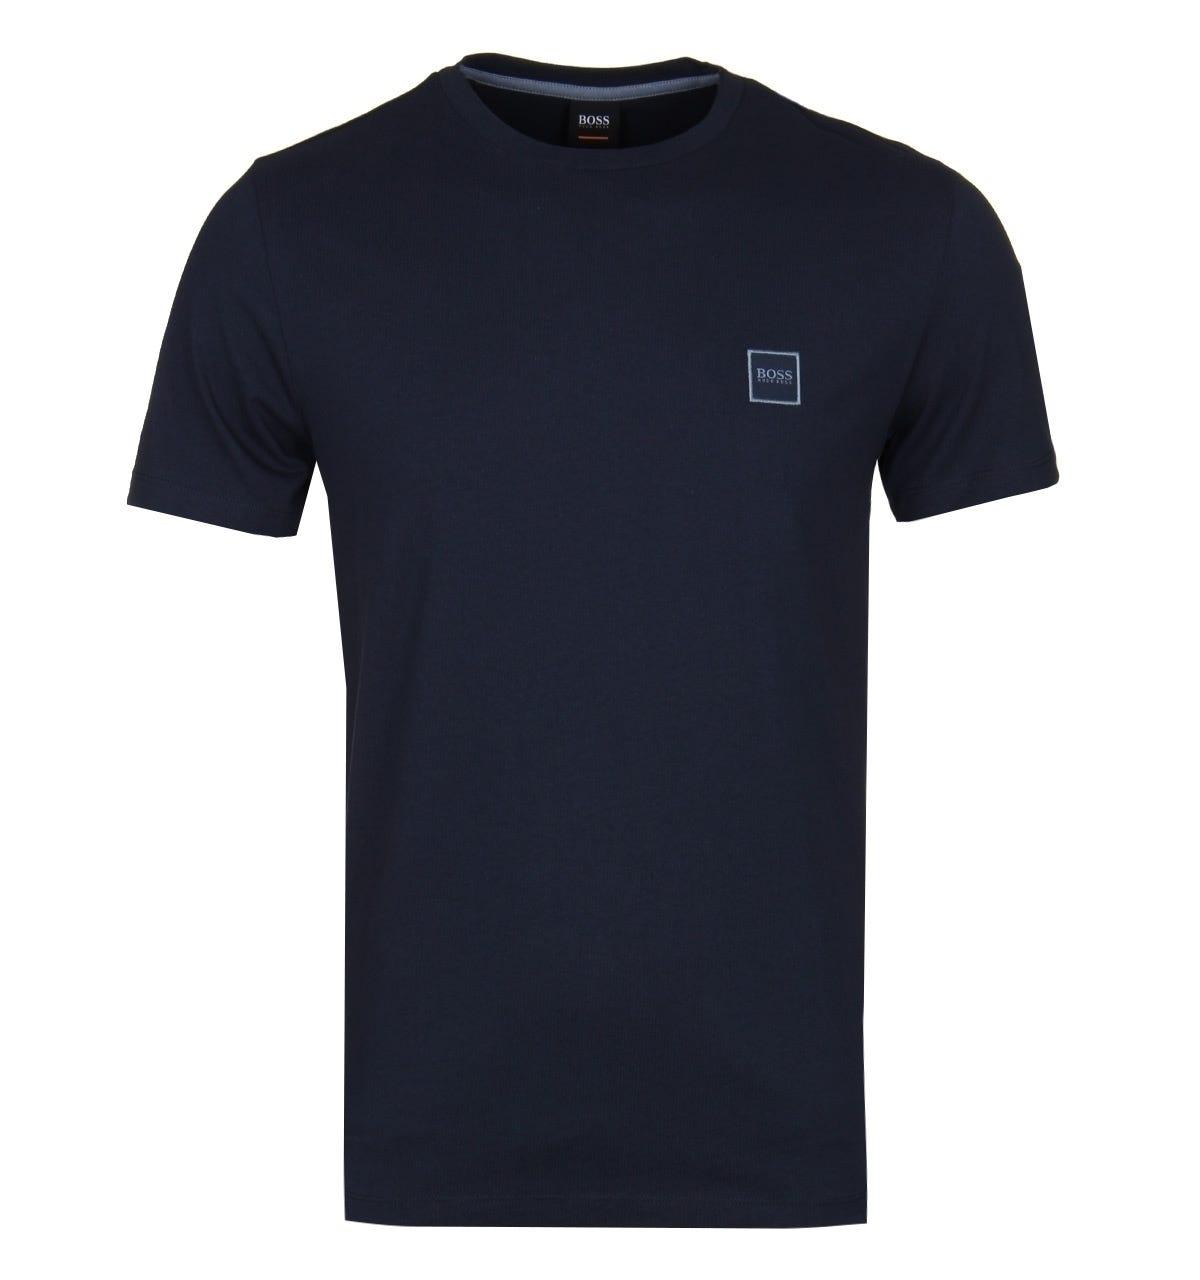 BOSS by Hugo Boss Cotton Tales Navy T-shirt in Blue for Men - Lyst